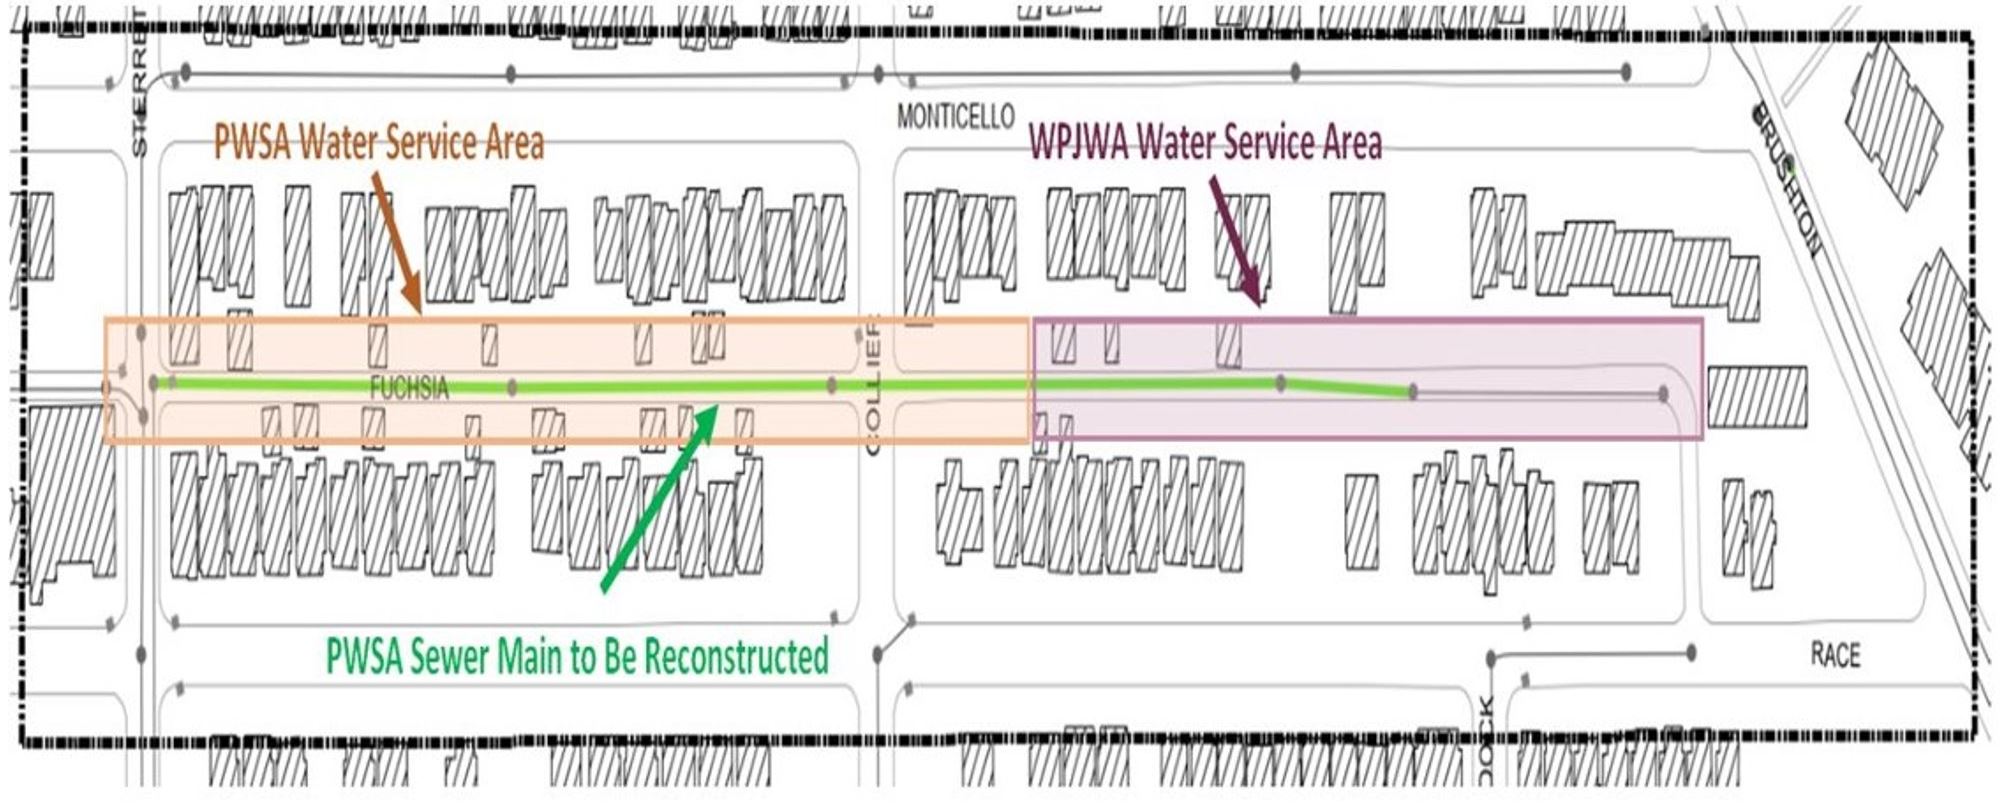 Fuchsia Way Sewer Reconstruction Project Image